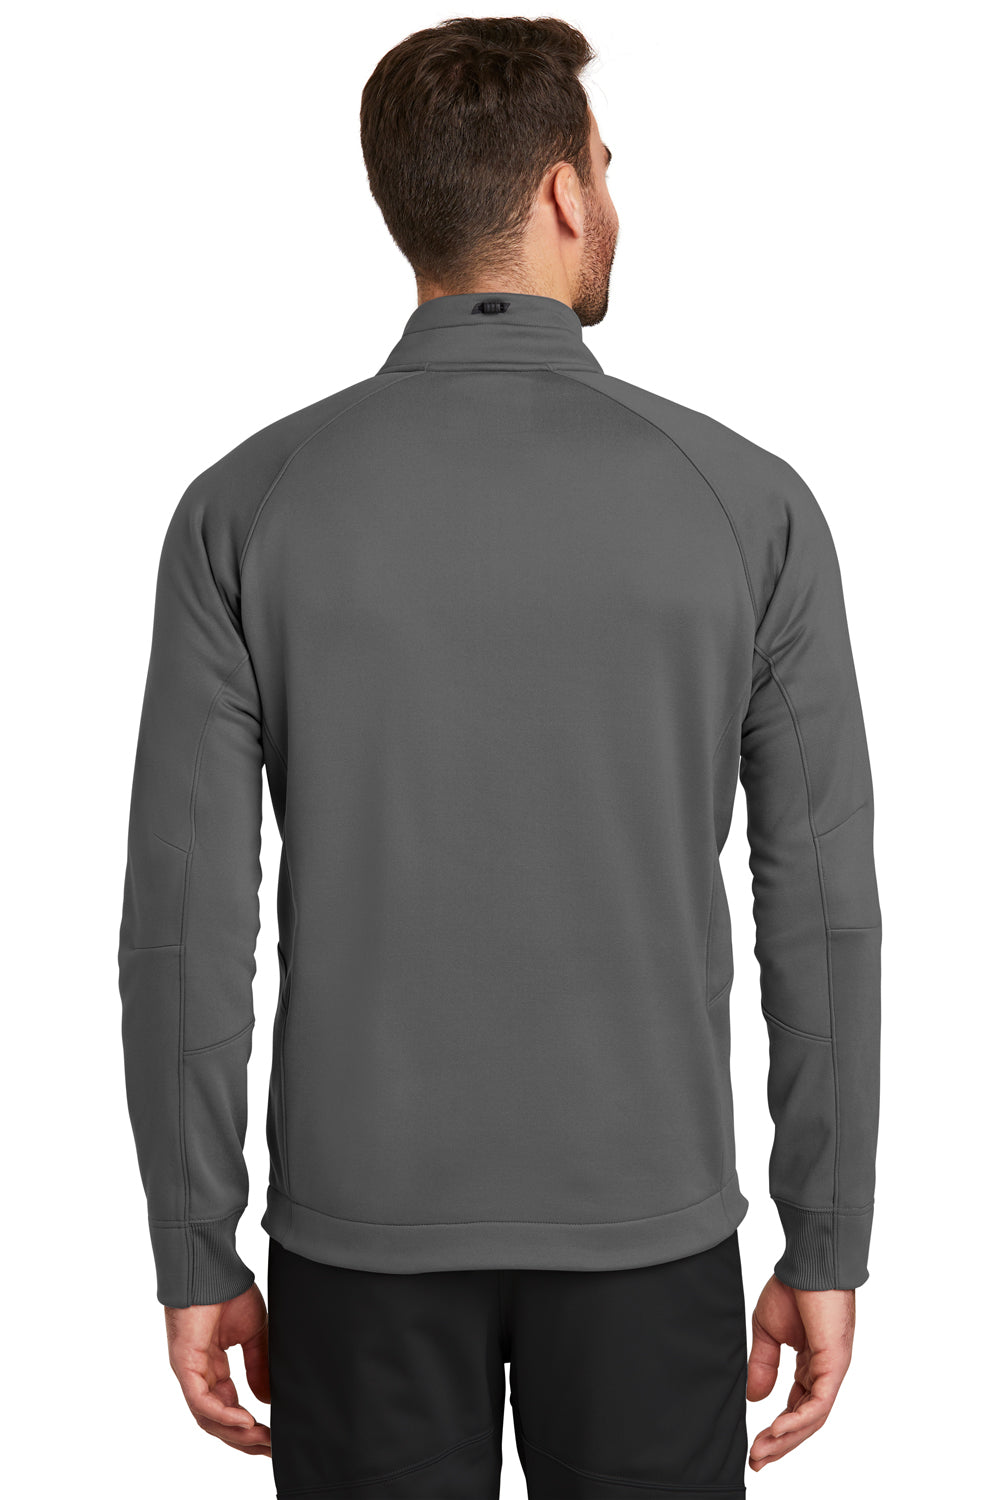 New Era NEA523 Mens Venue Moisture Wicking Fleece 1/4 Zip Sweatshirt Graphite Grey Back